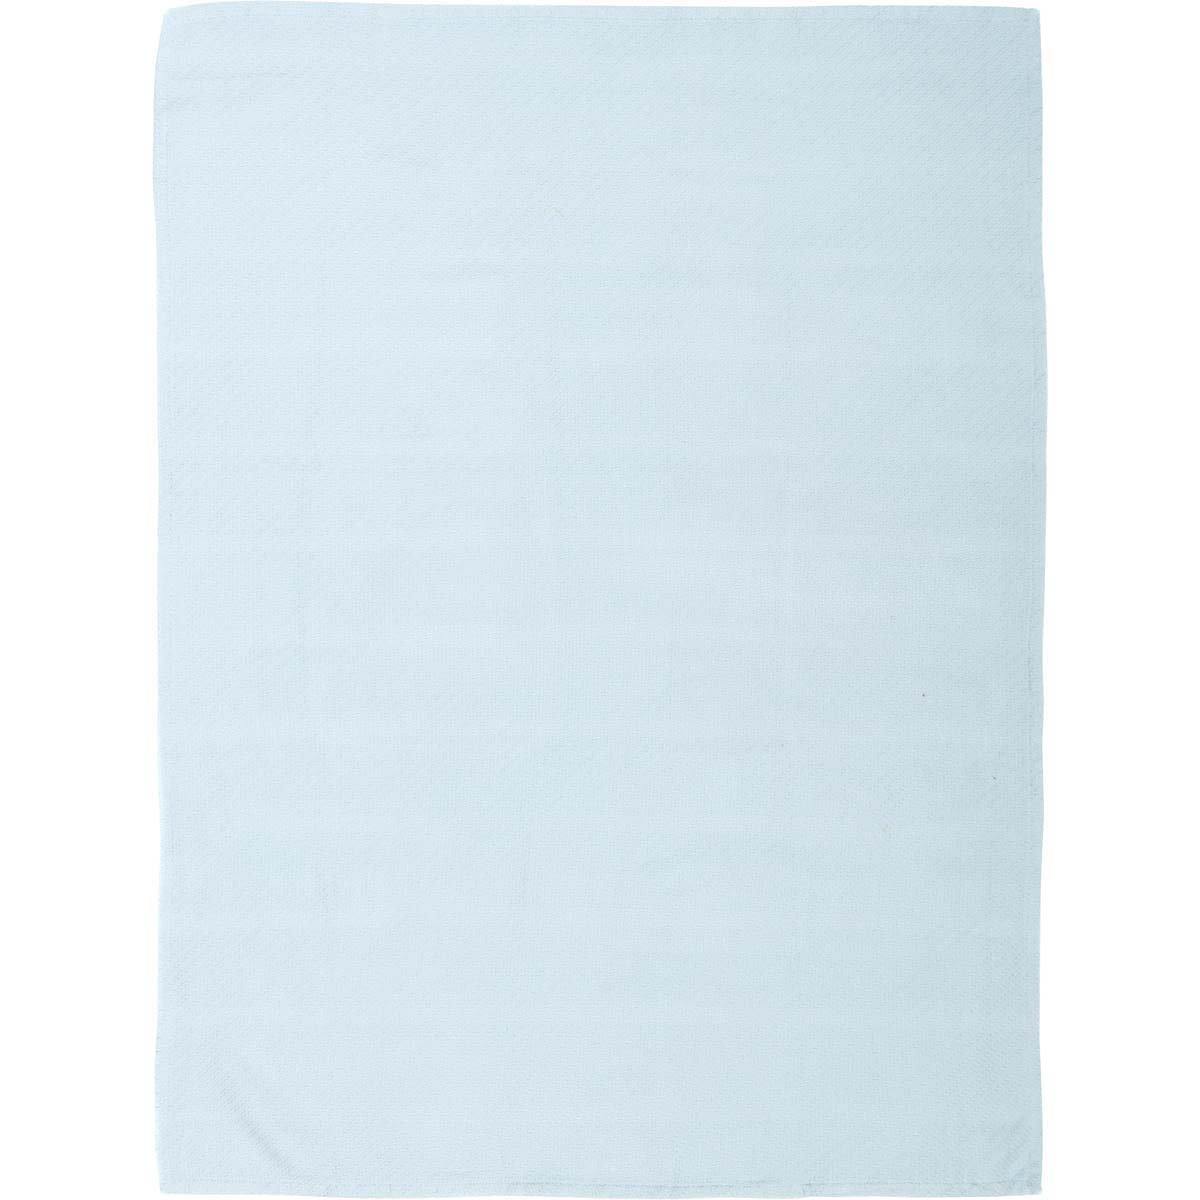 Dusty Blue Baby Blanket 48x36 VHC Brands - The Fox Decor